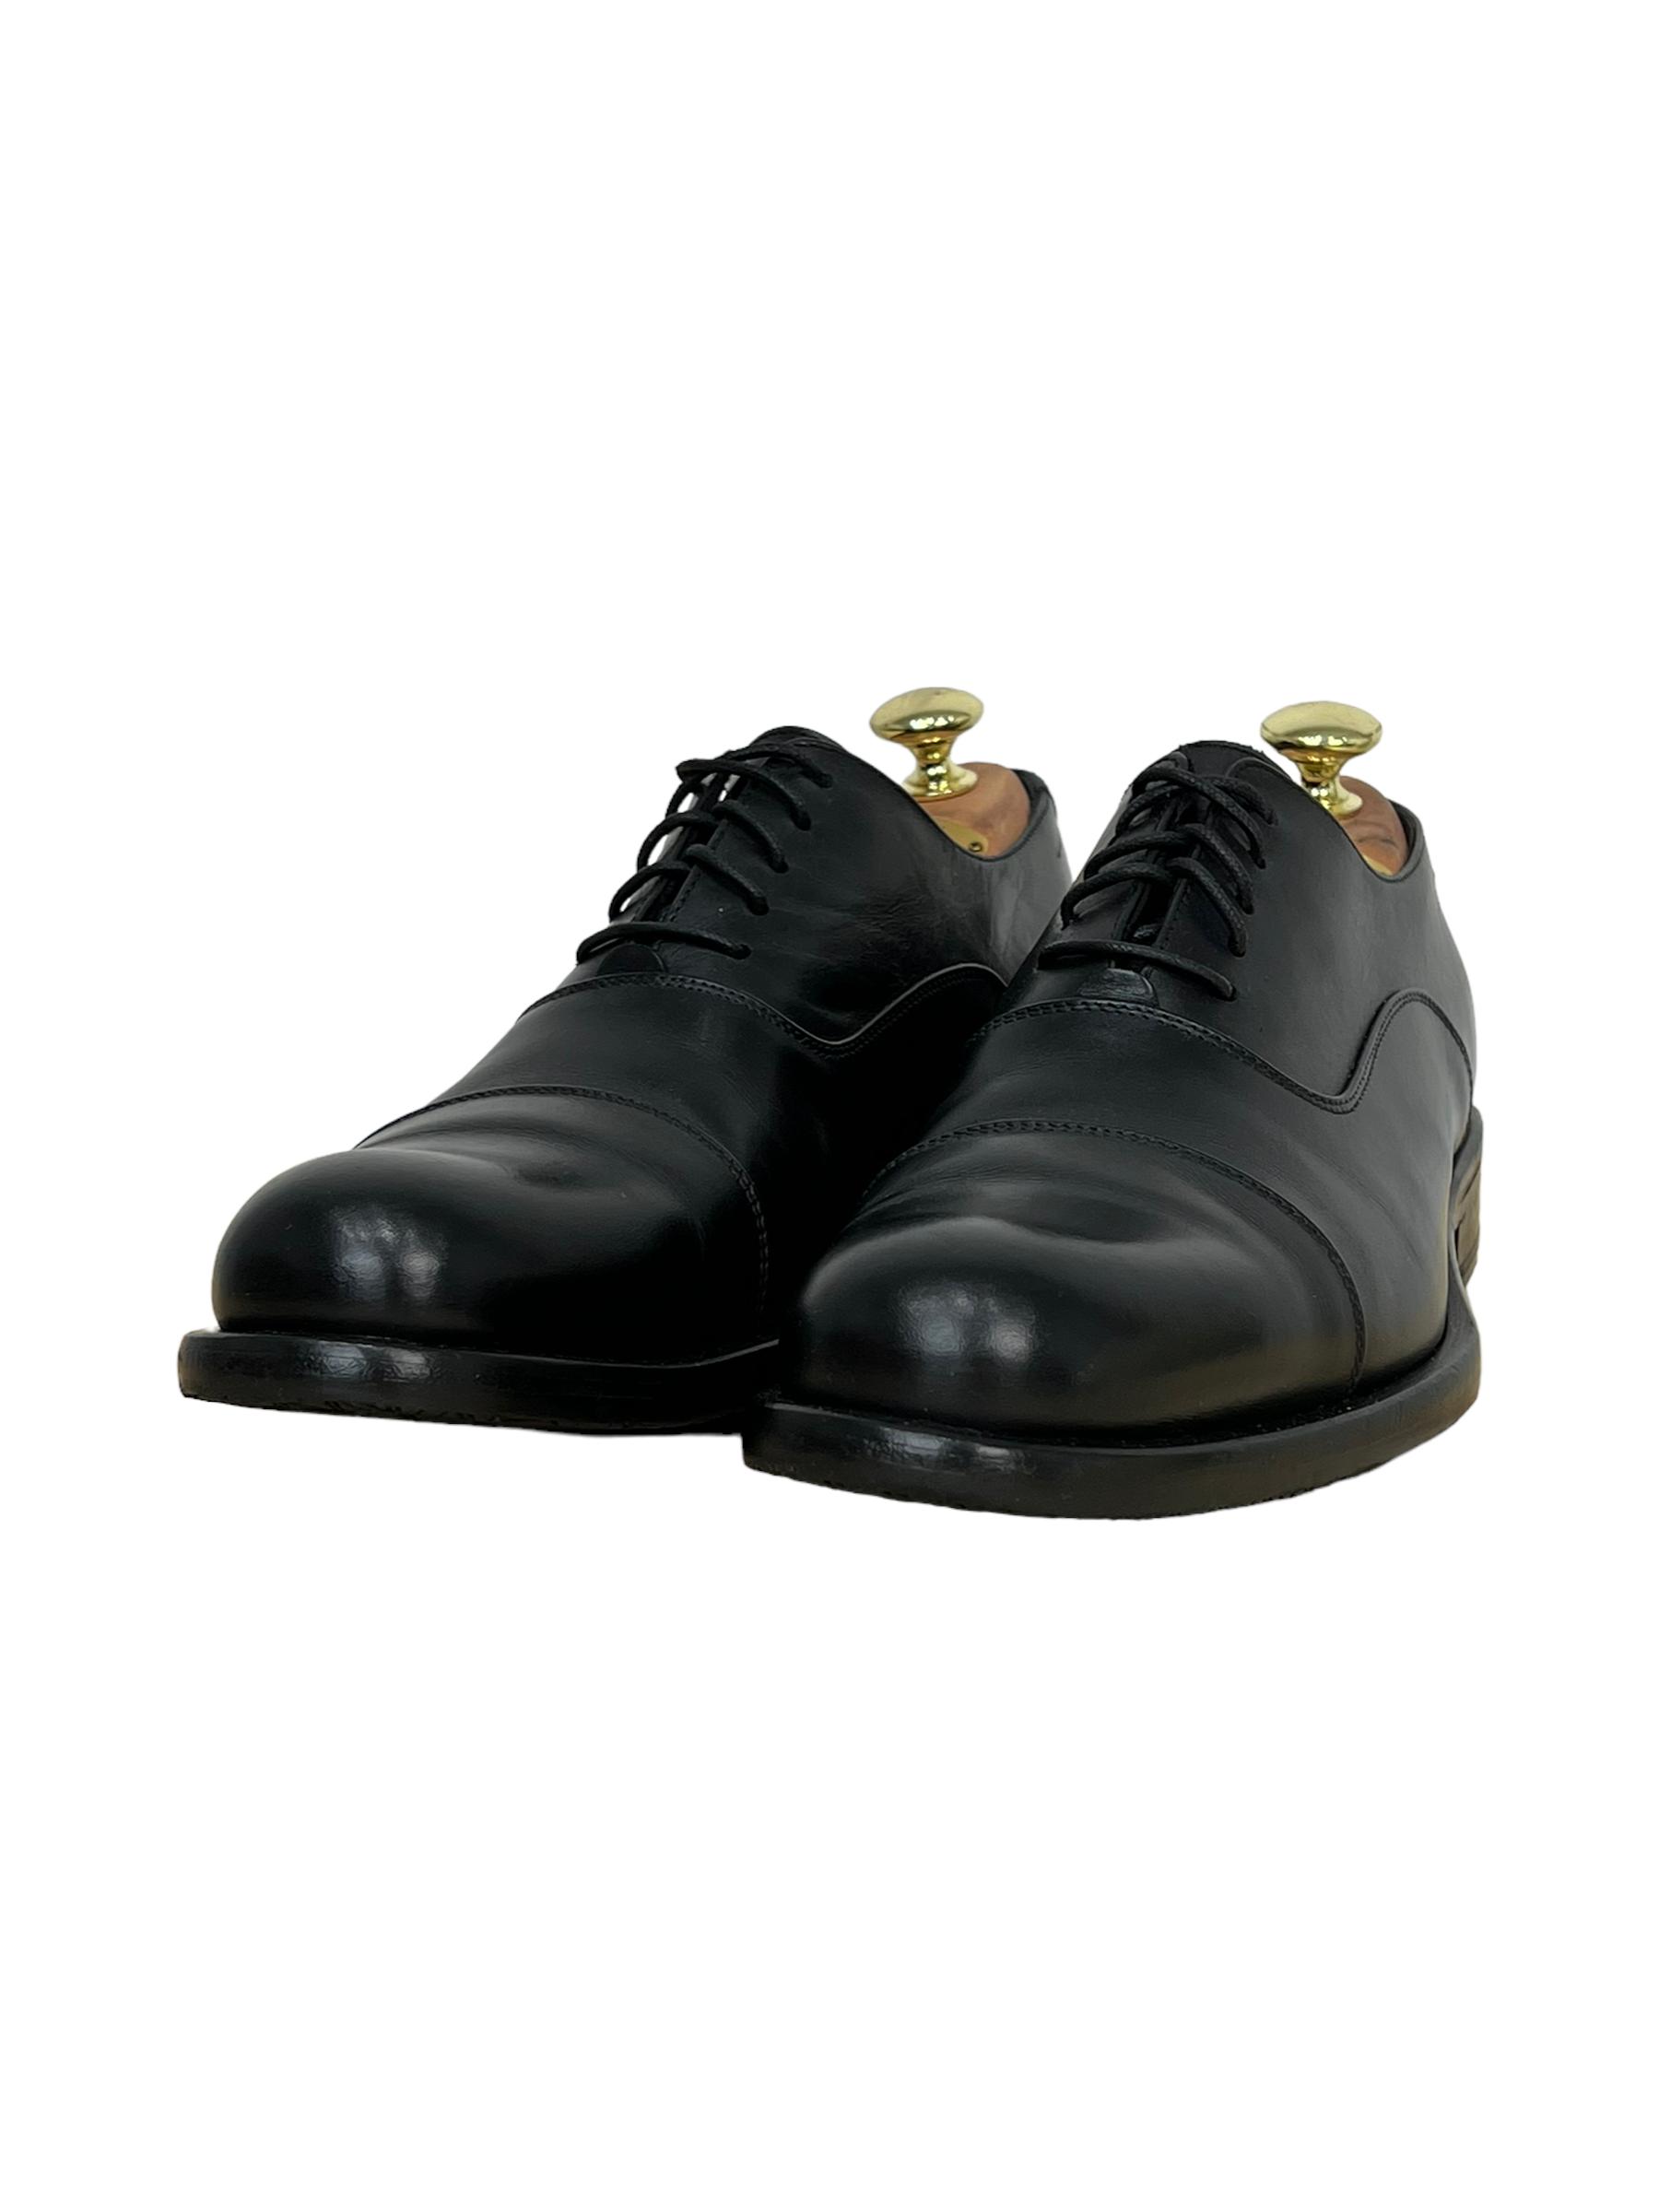 Giorgio Armani Black Leather Cap Toe Oxford Dress Shoes – Genuine Design  Luxury Consignment